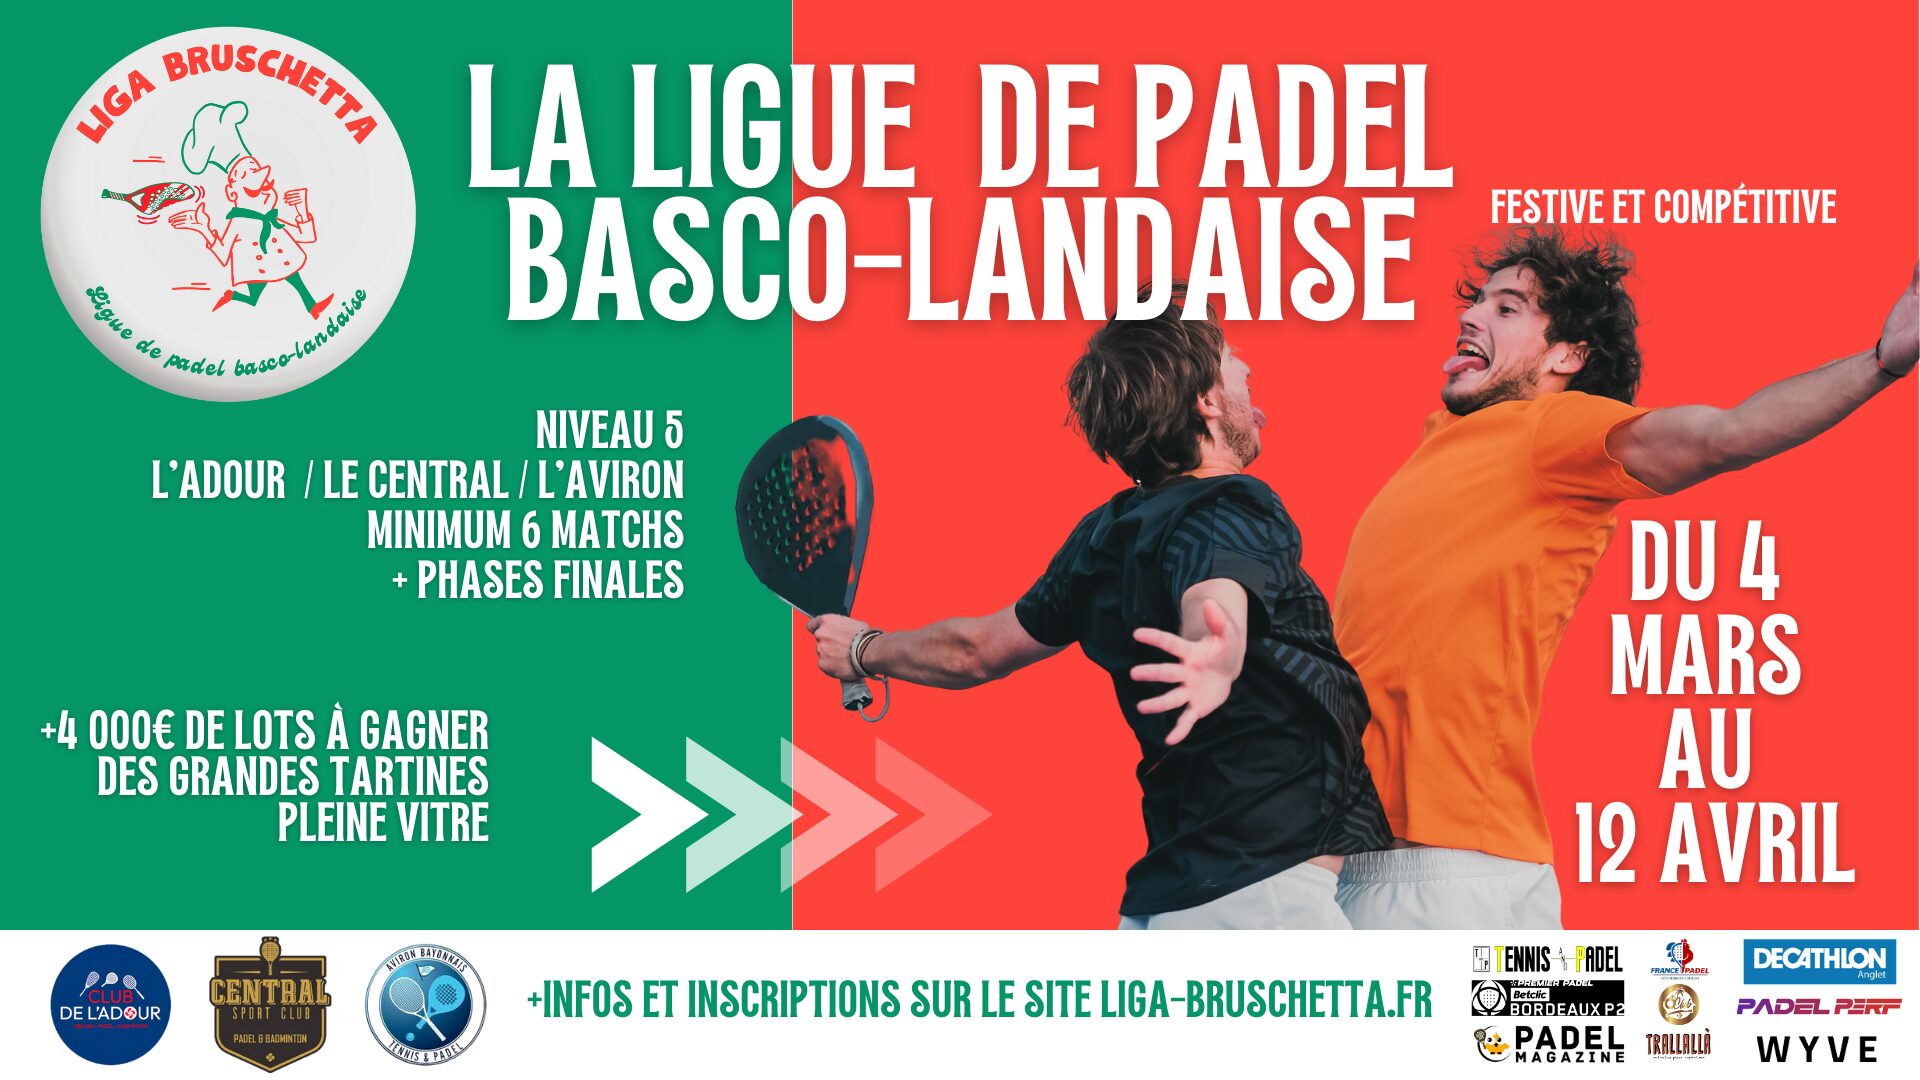 La Liga Bruschetta : la première ligue de padel basco-landaise